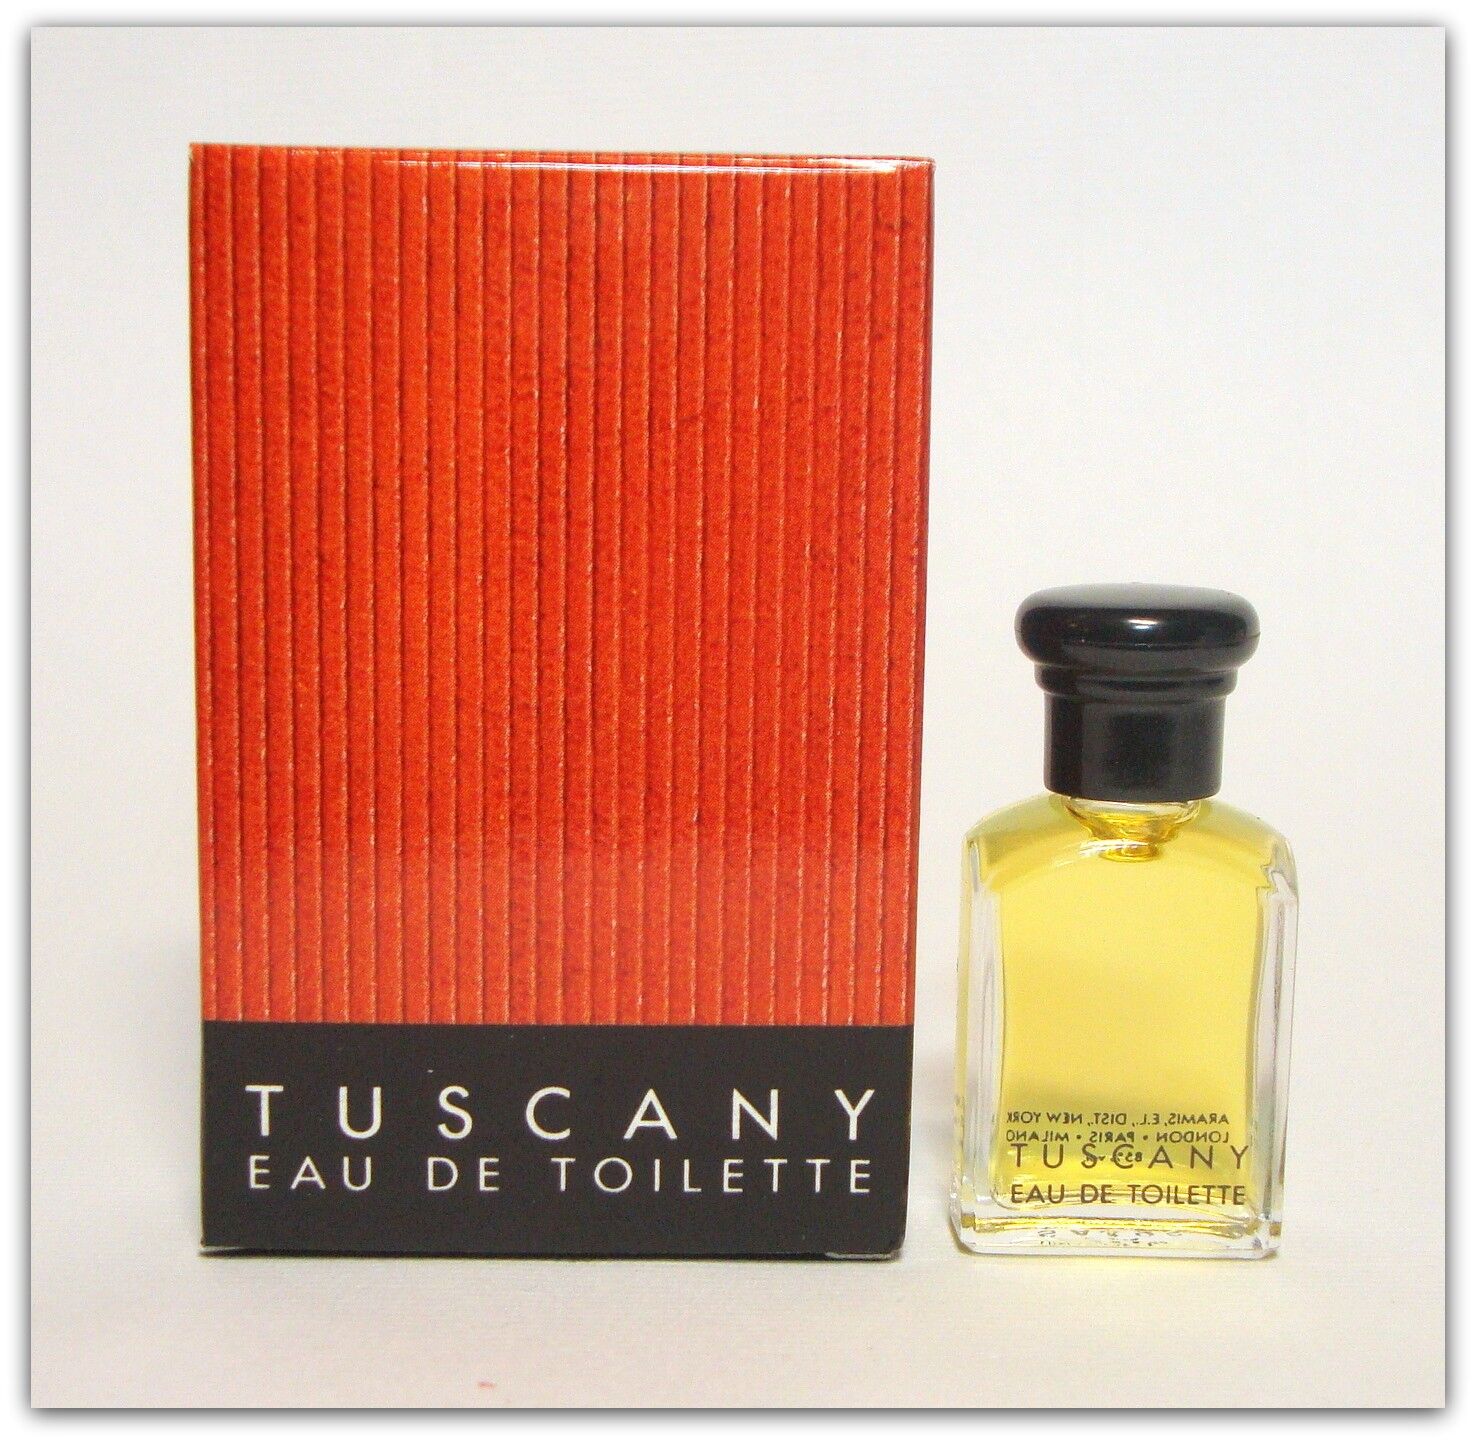 TUSCANY by Aramis Men's Eau de toilette 4.5 ml. 0.15 fl oz mini perfume